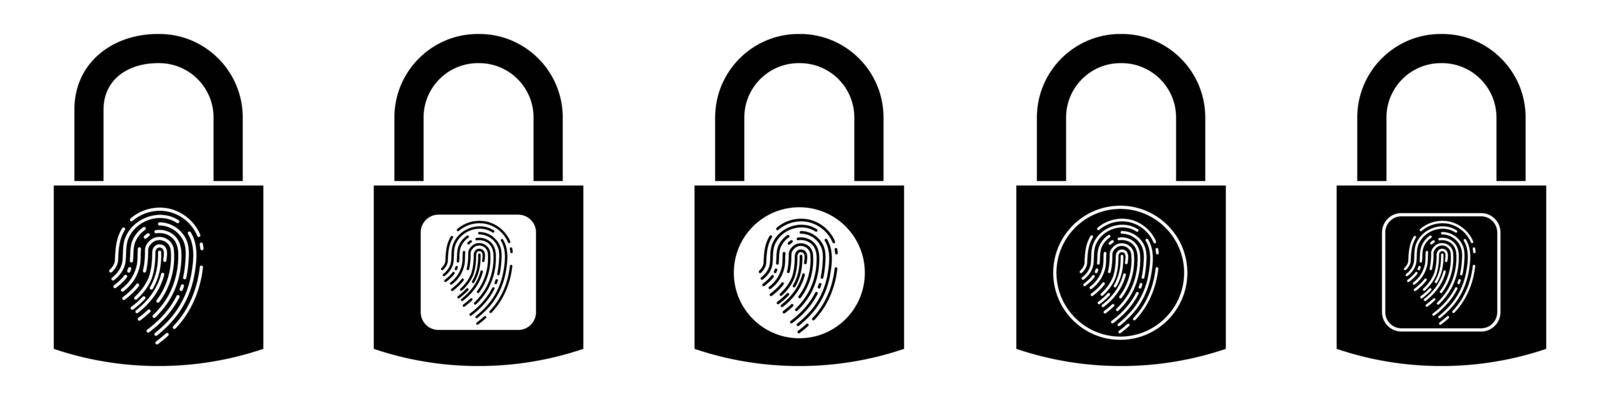 Fingerprint padlock icon. Scan fingerprint icon. Security concept icon. by Chekman